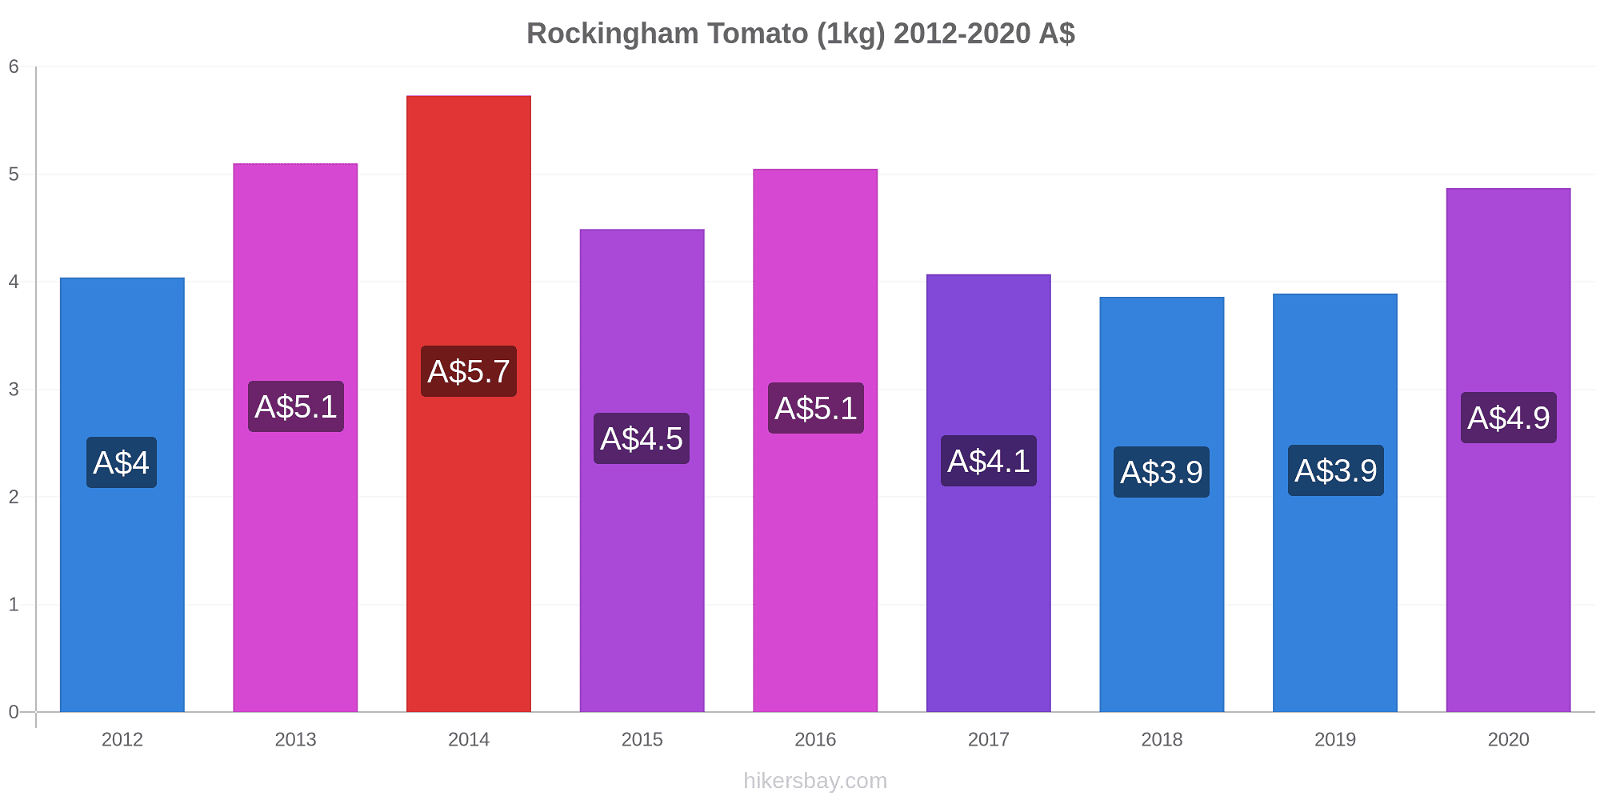 Rockingham price changes Tomato (1kg) hikersbay.com